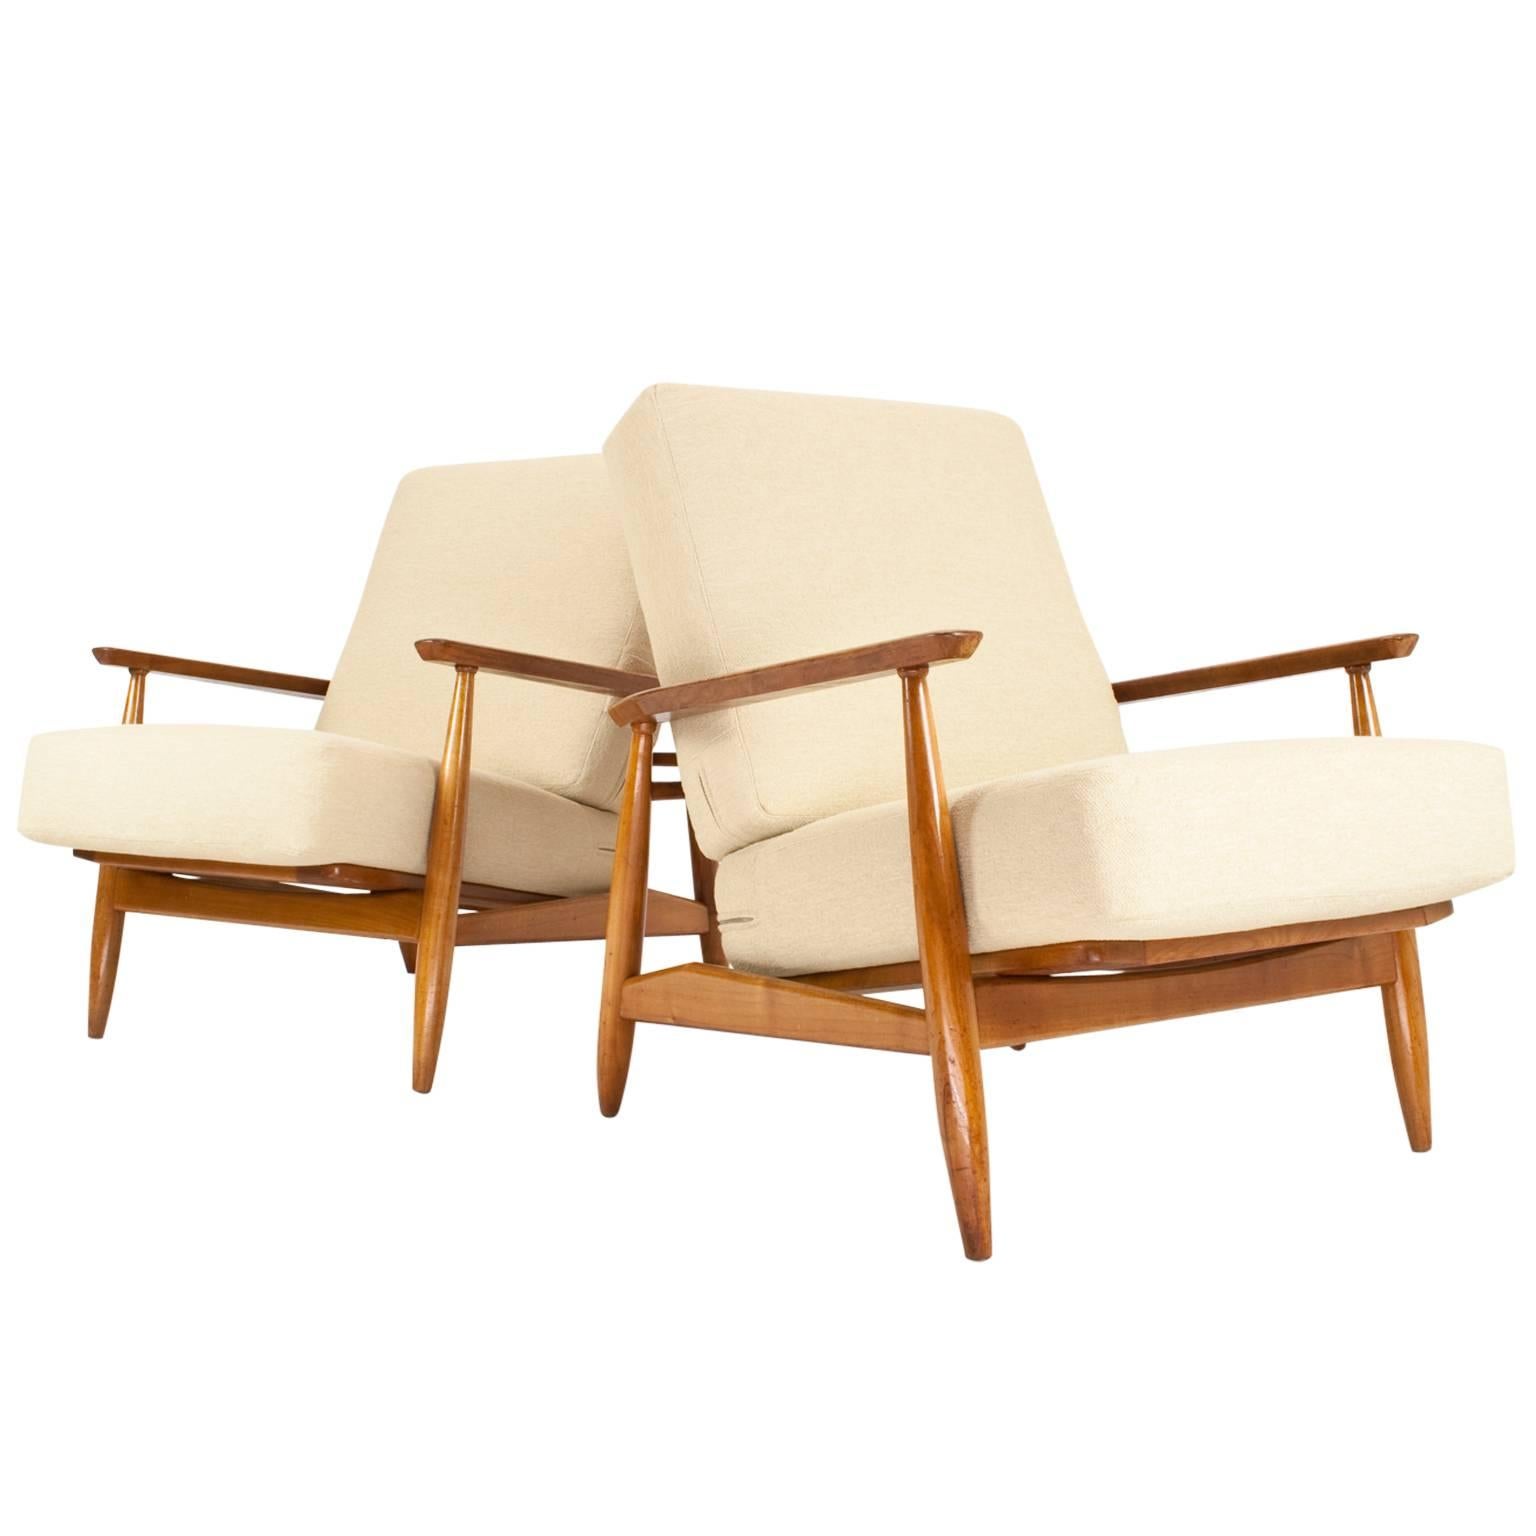 Beautiful Pair of Danish Modern Easy Chairs 1960s, New Upholstered